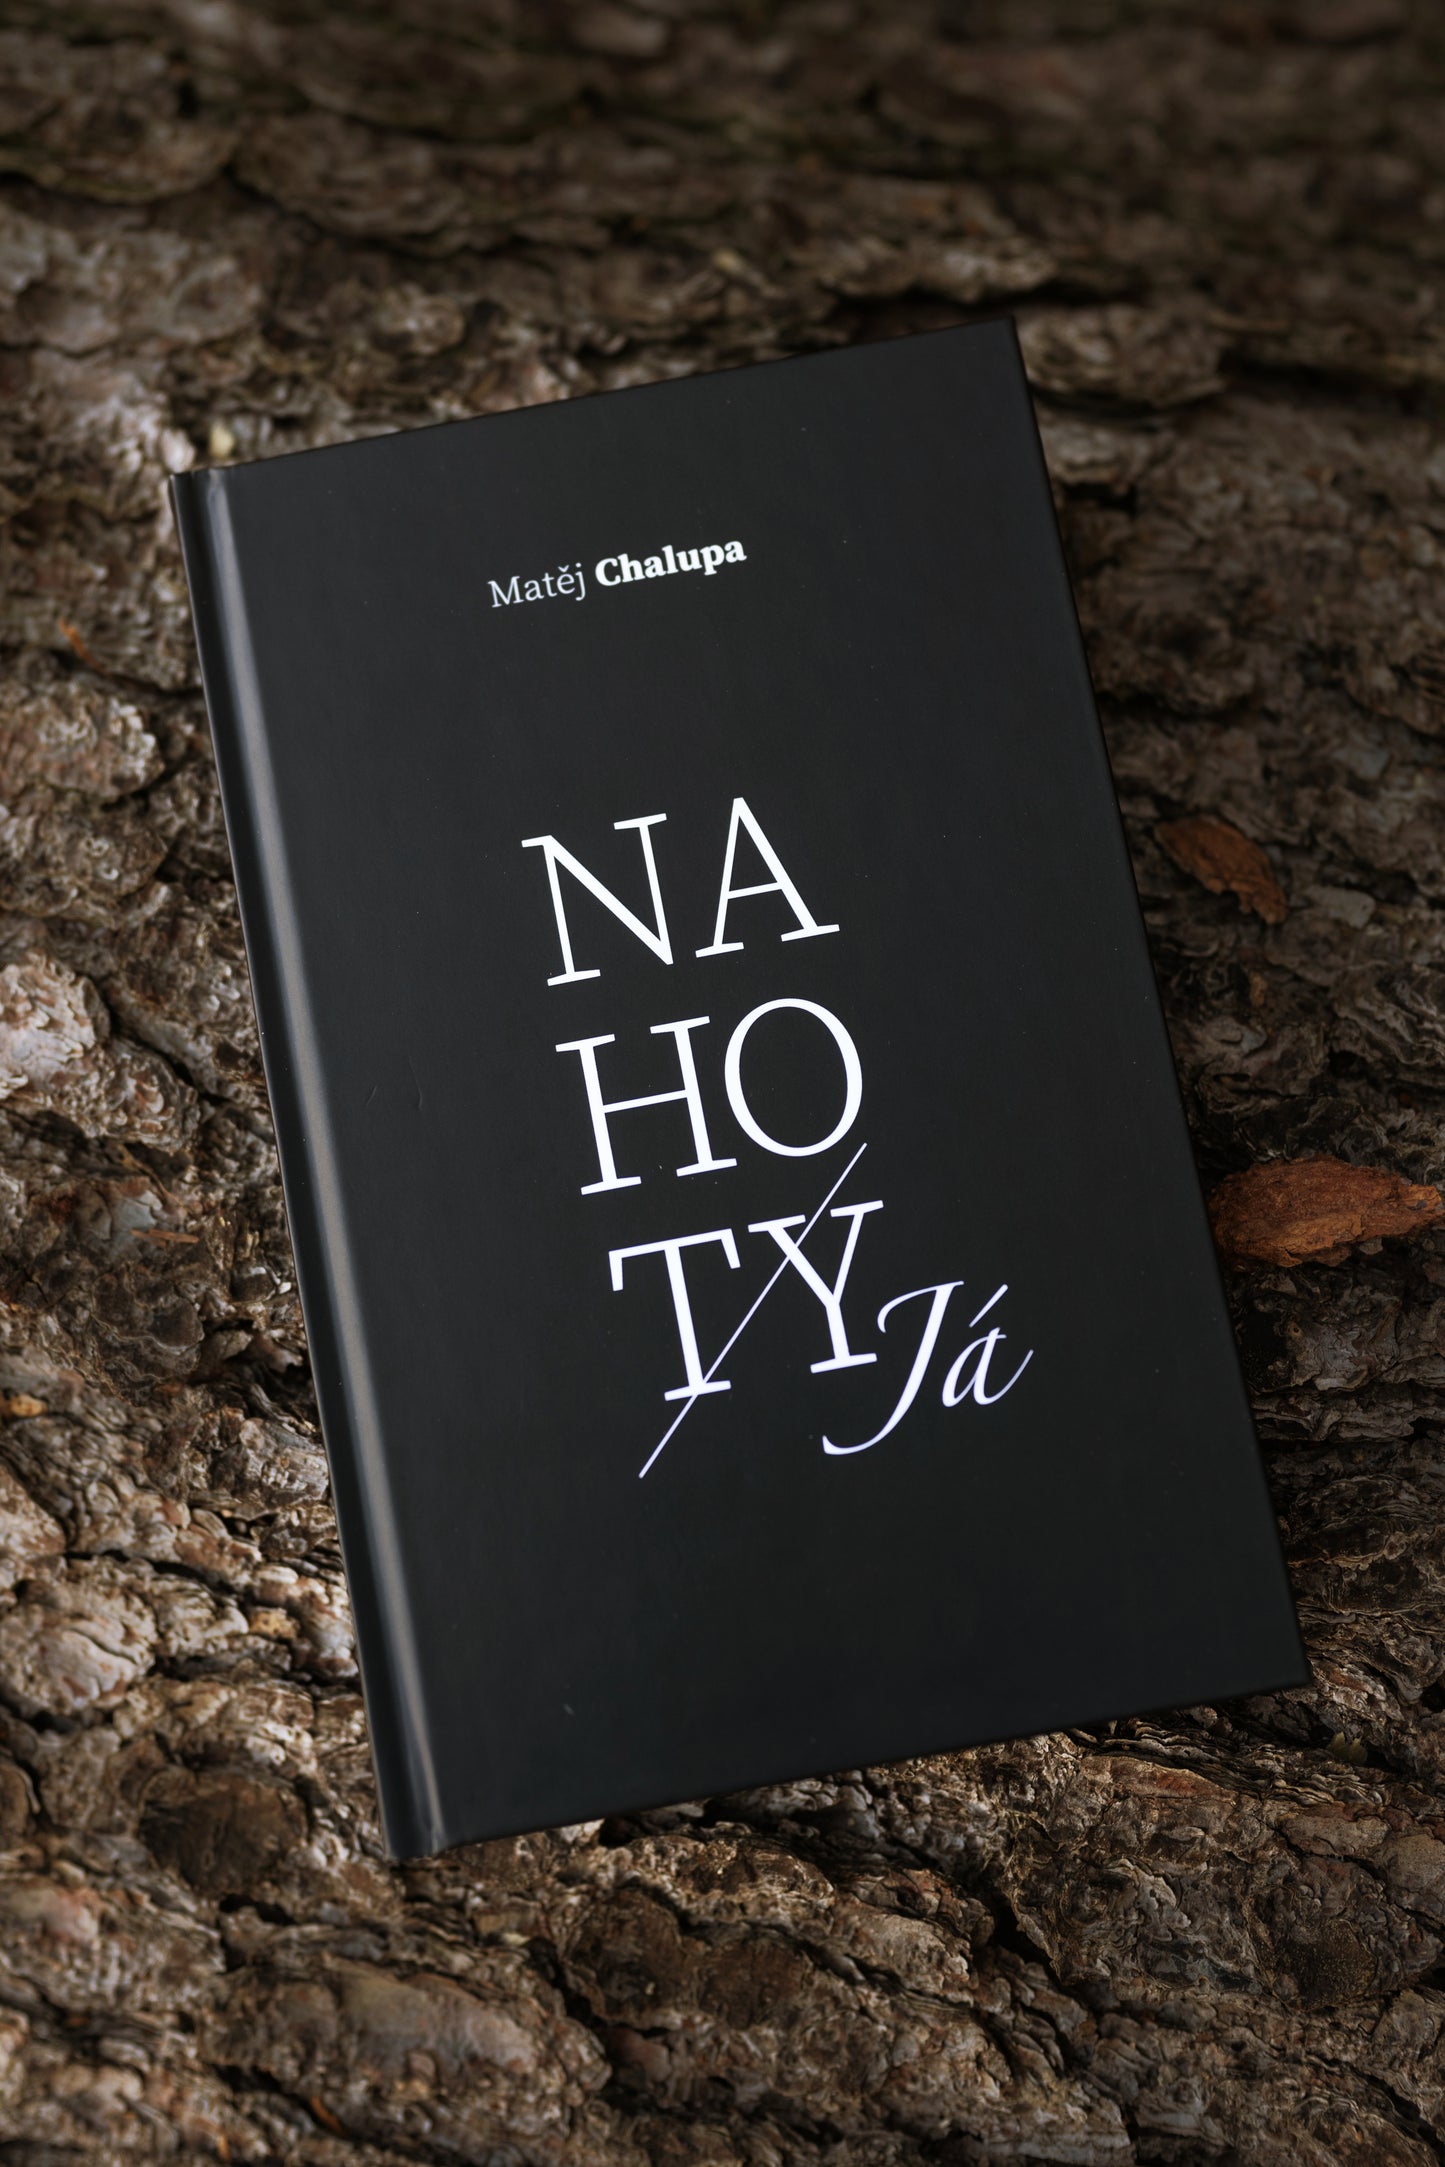 Nahoty - Matěj Chalupa (Only Czech Language)